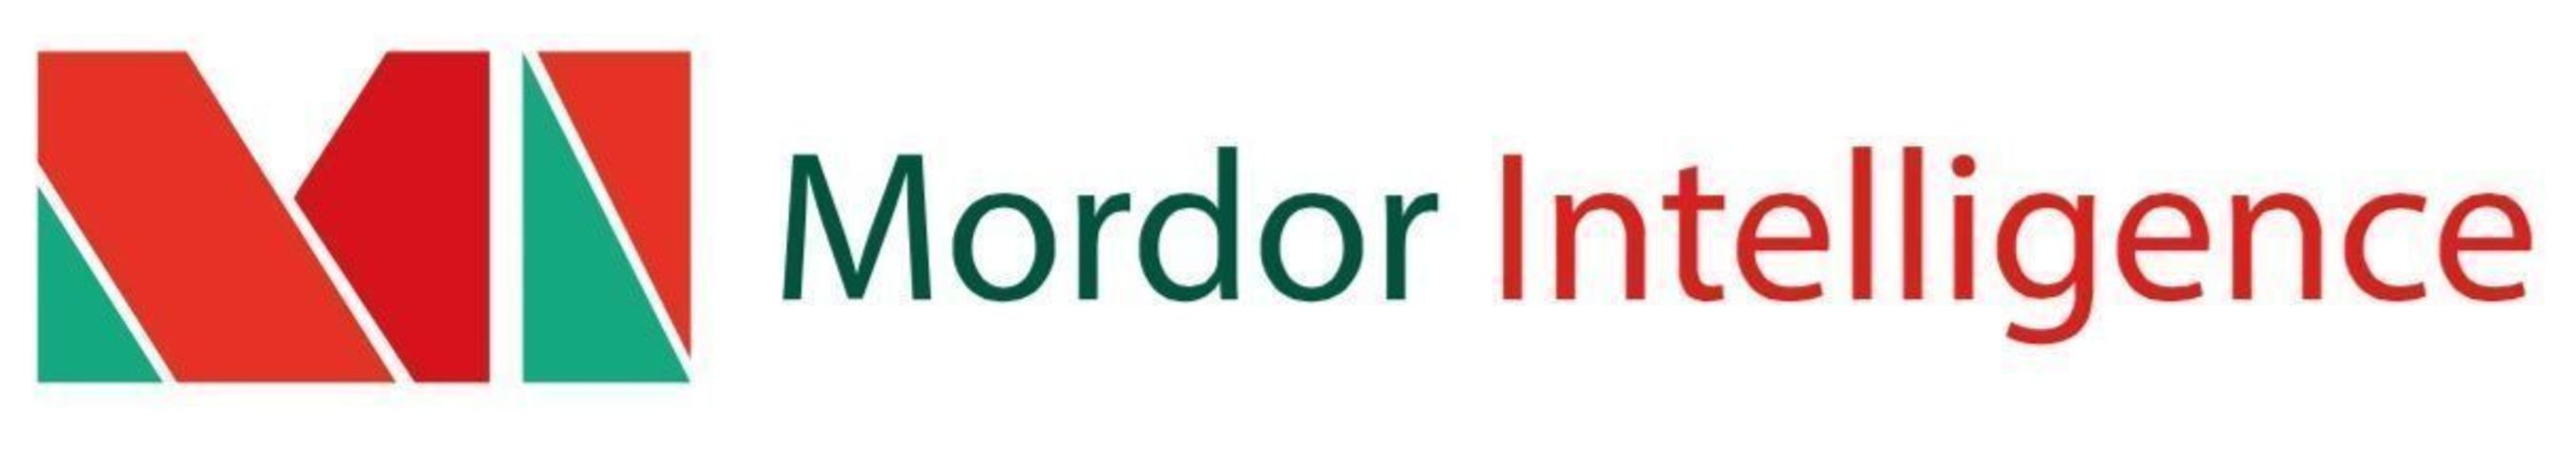 Mordor Intelligence - Logo (PRNewsFoto/Mordor Intelligence)